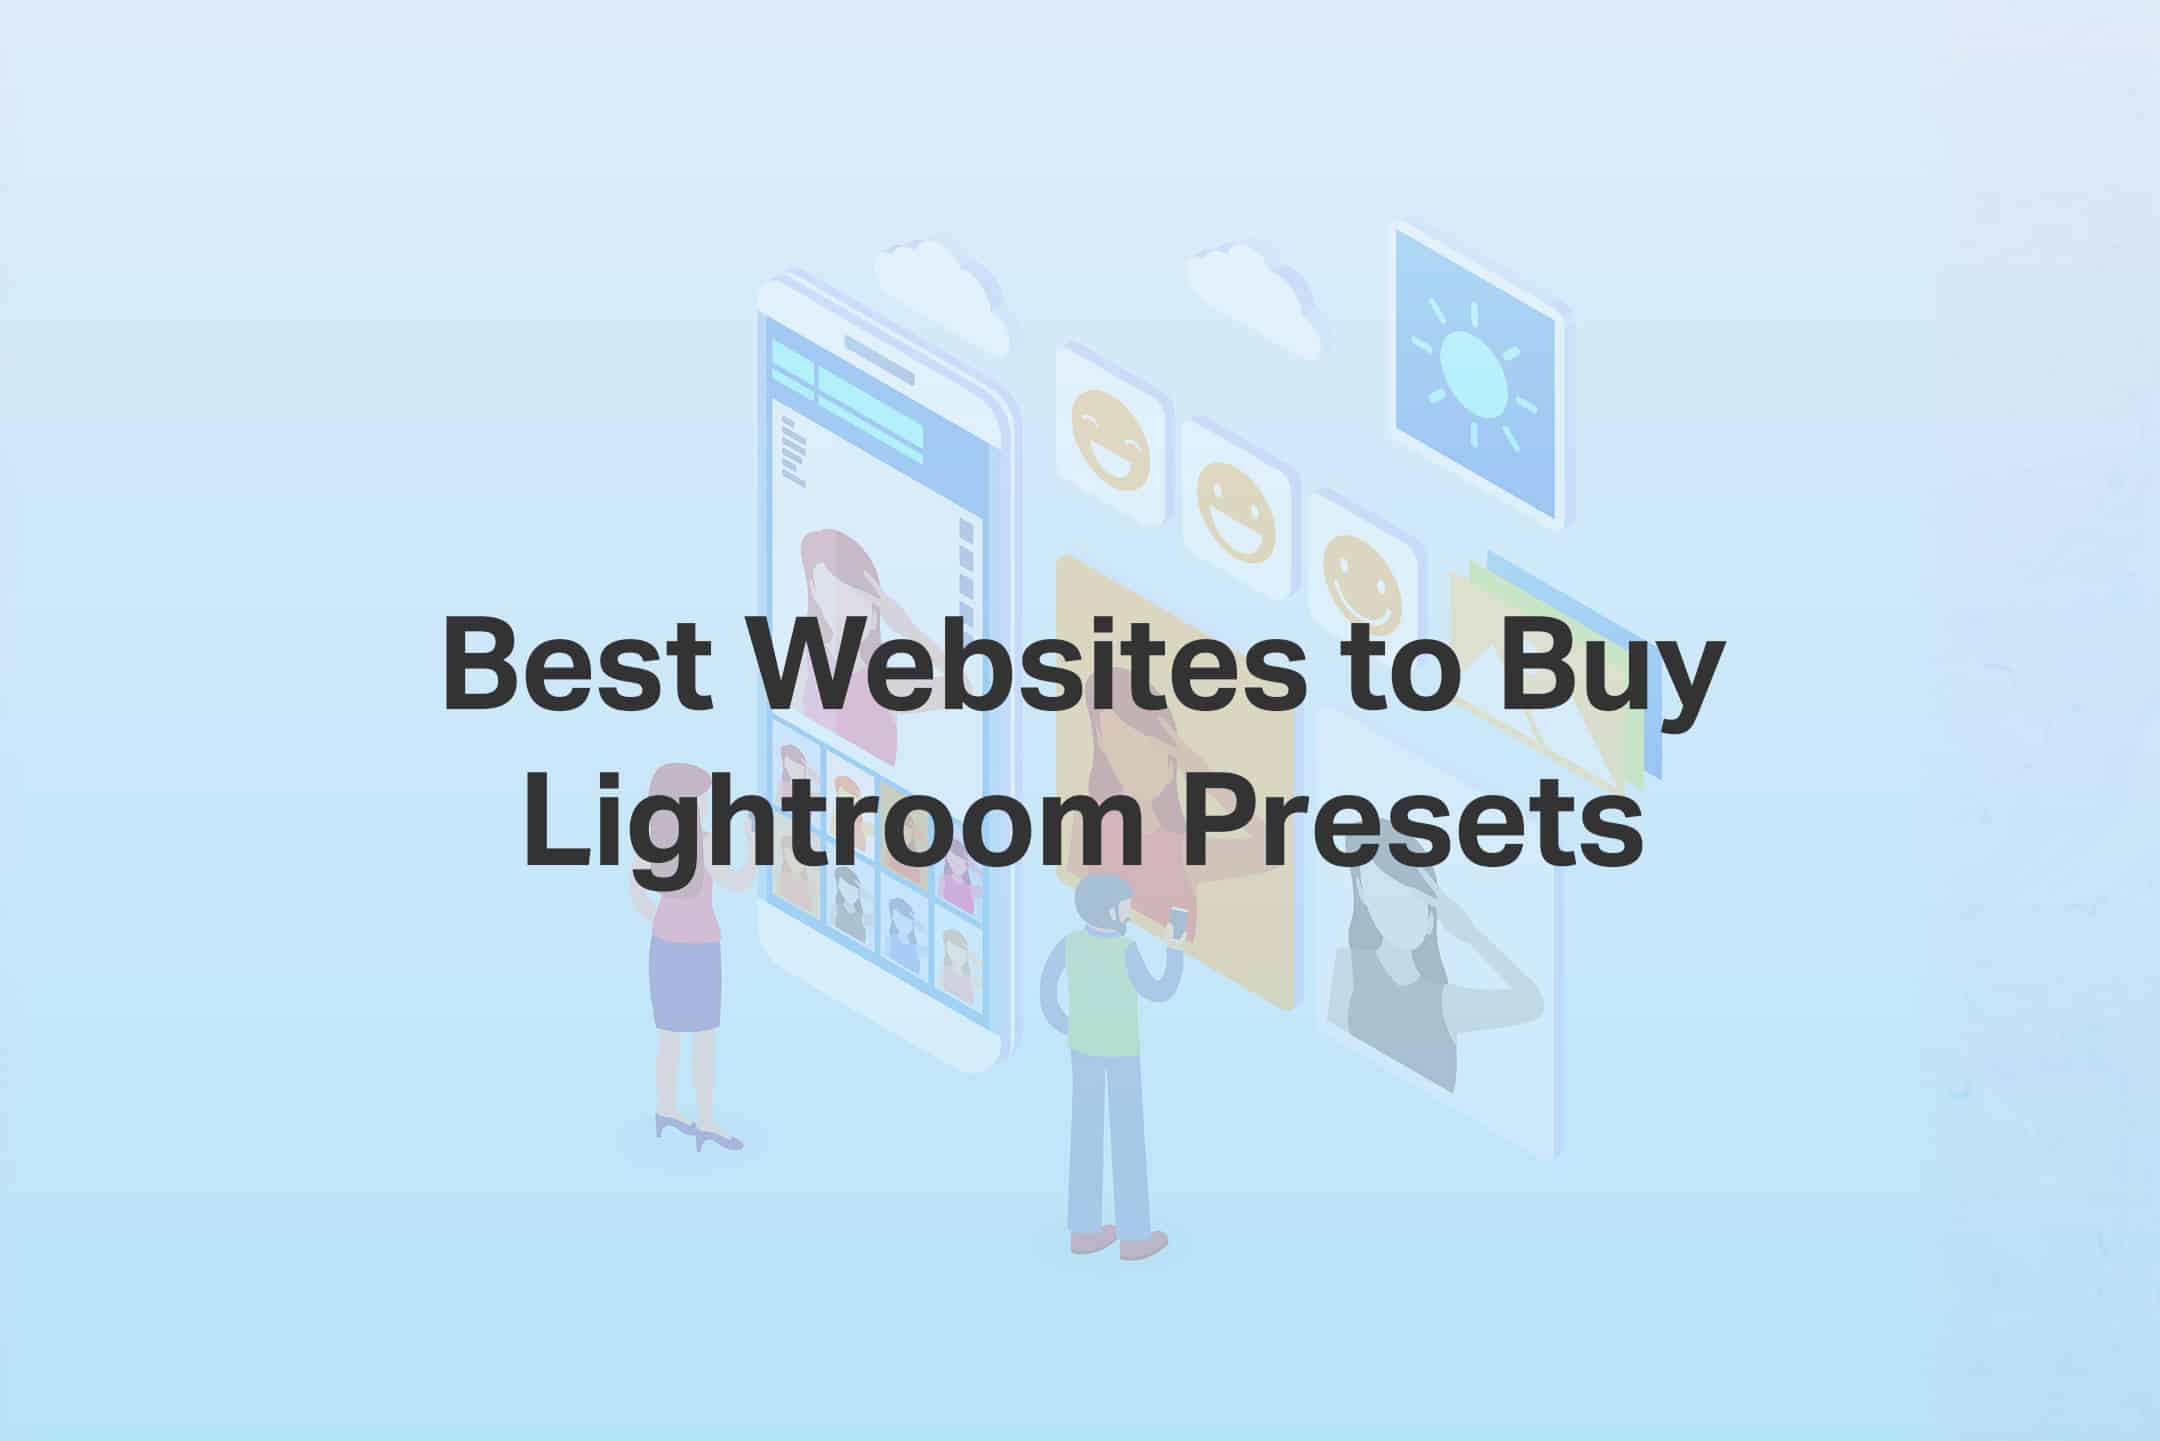 The Best Websites to Buy Lightroom Presets